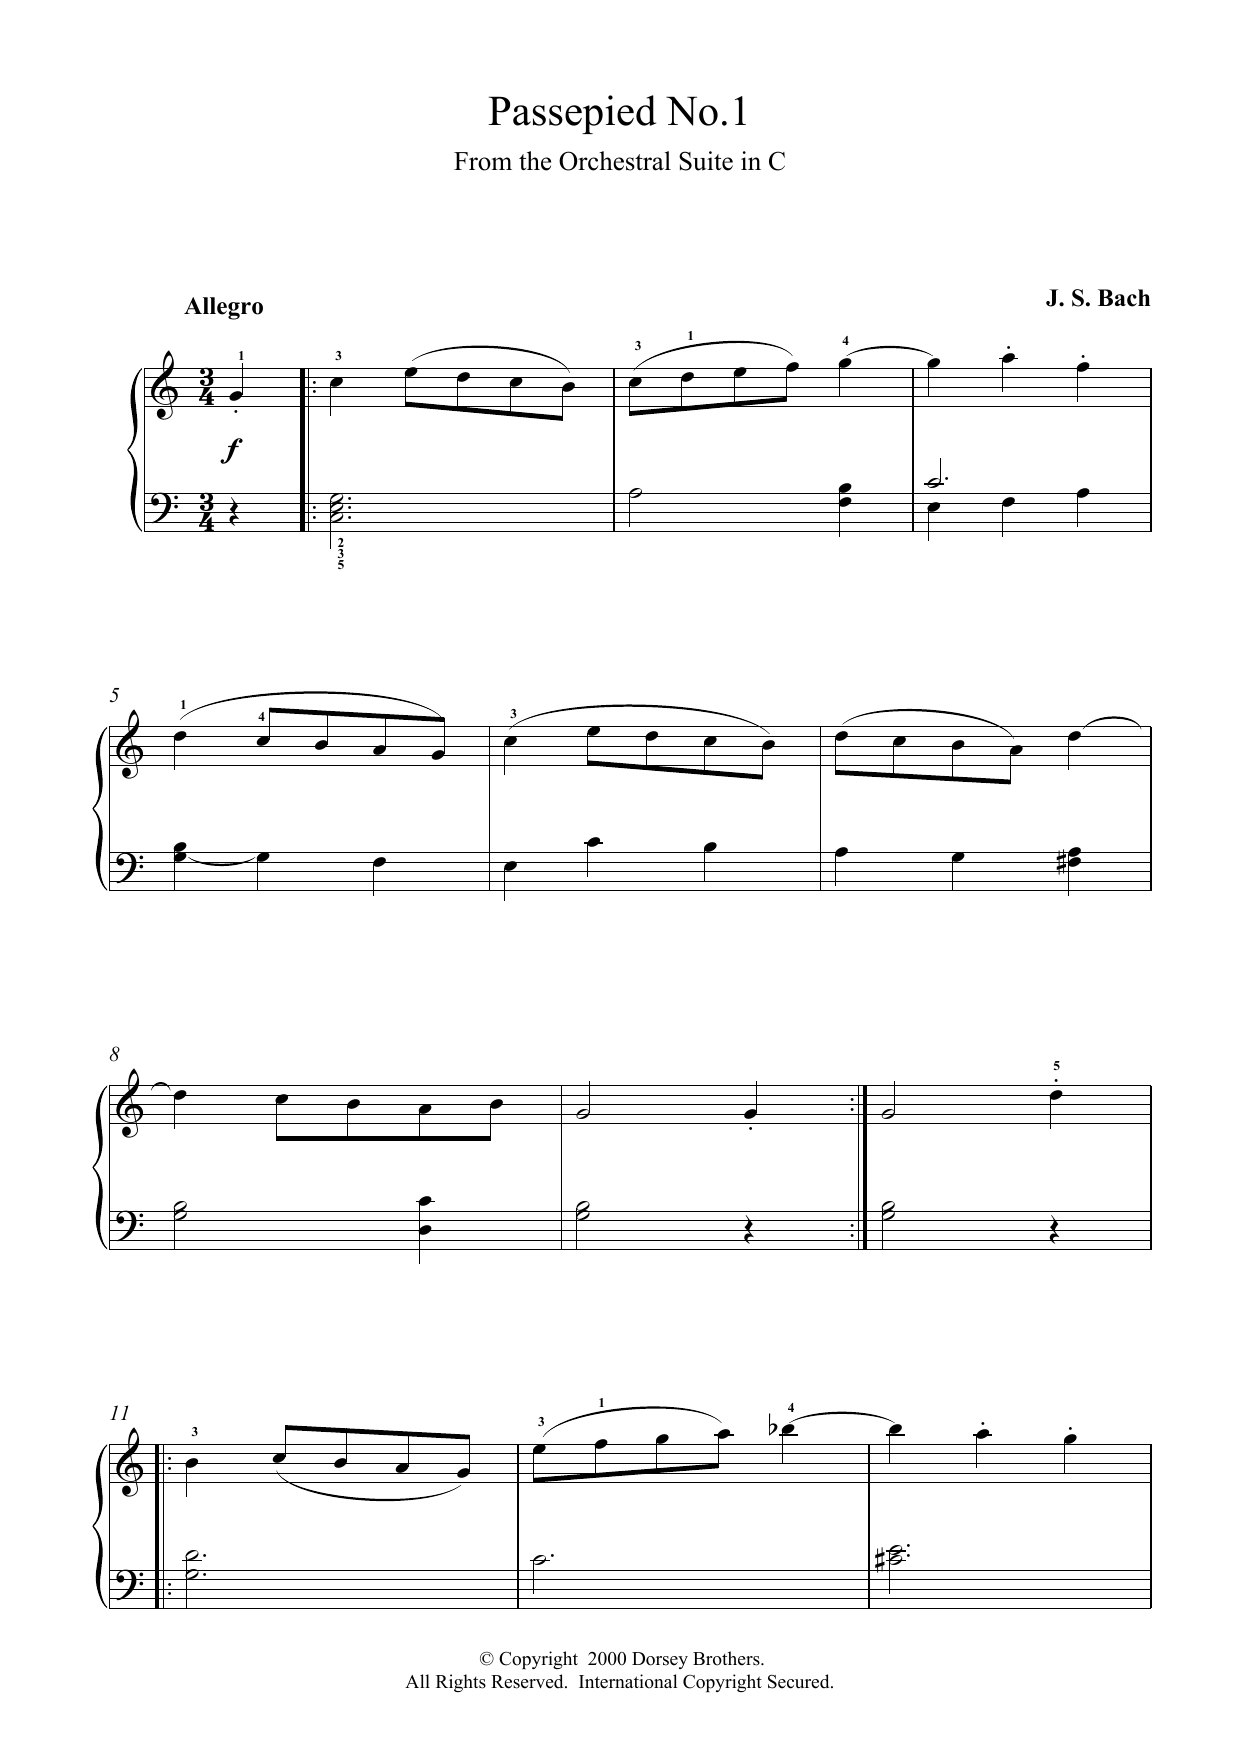 Johann Sebastian Bach Passepied No.1 sheet music notes printable PDF score